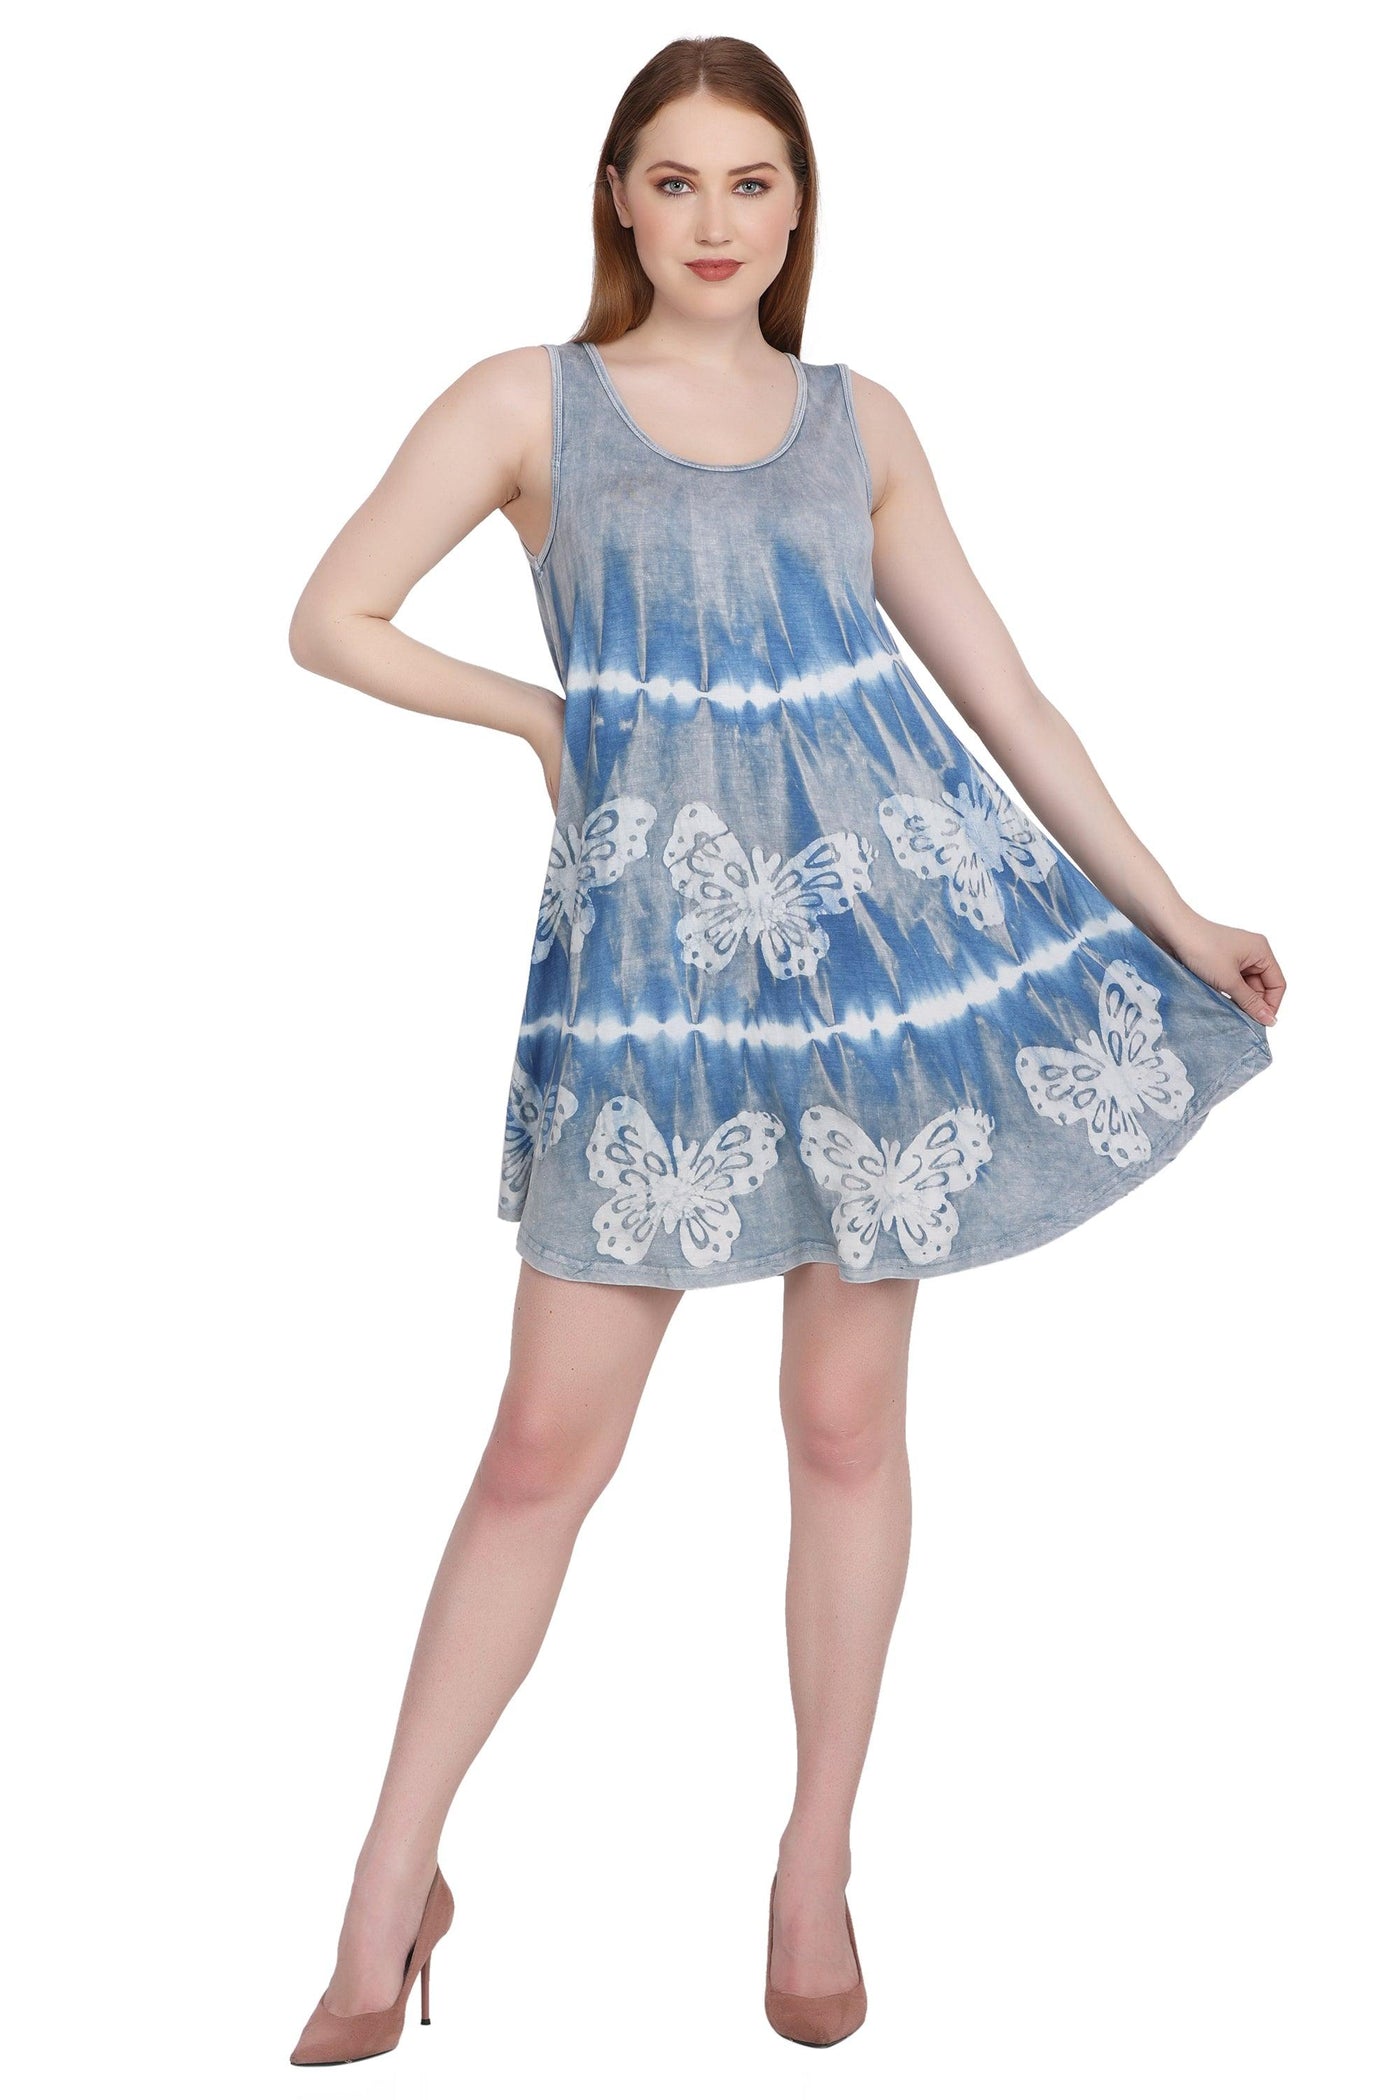 Short Tie Dye Sleeveless Butterfly Print Dress SPD73  - Advance Apparels Inc